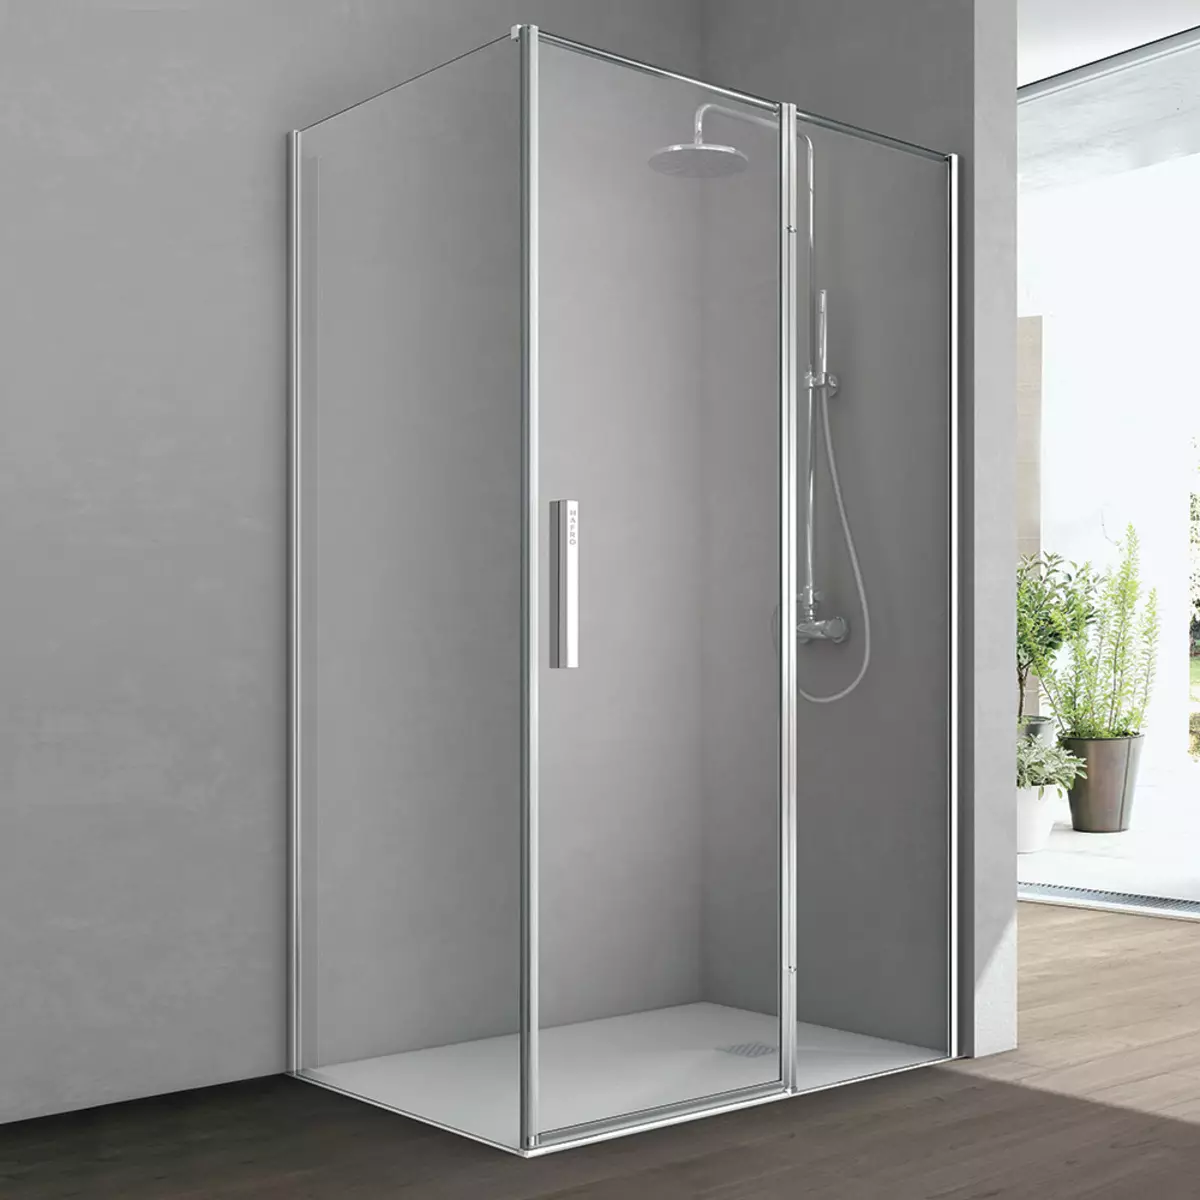 Shower Babia neSwing Door: Square Models 80x80, 90x90 uye 100X100 CM, rectangular uye Pentagonal Shower Baby neSwing Gonhi 10330_25